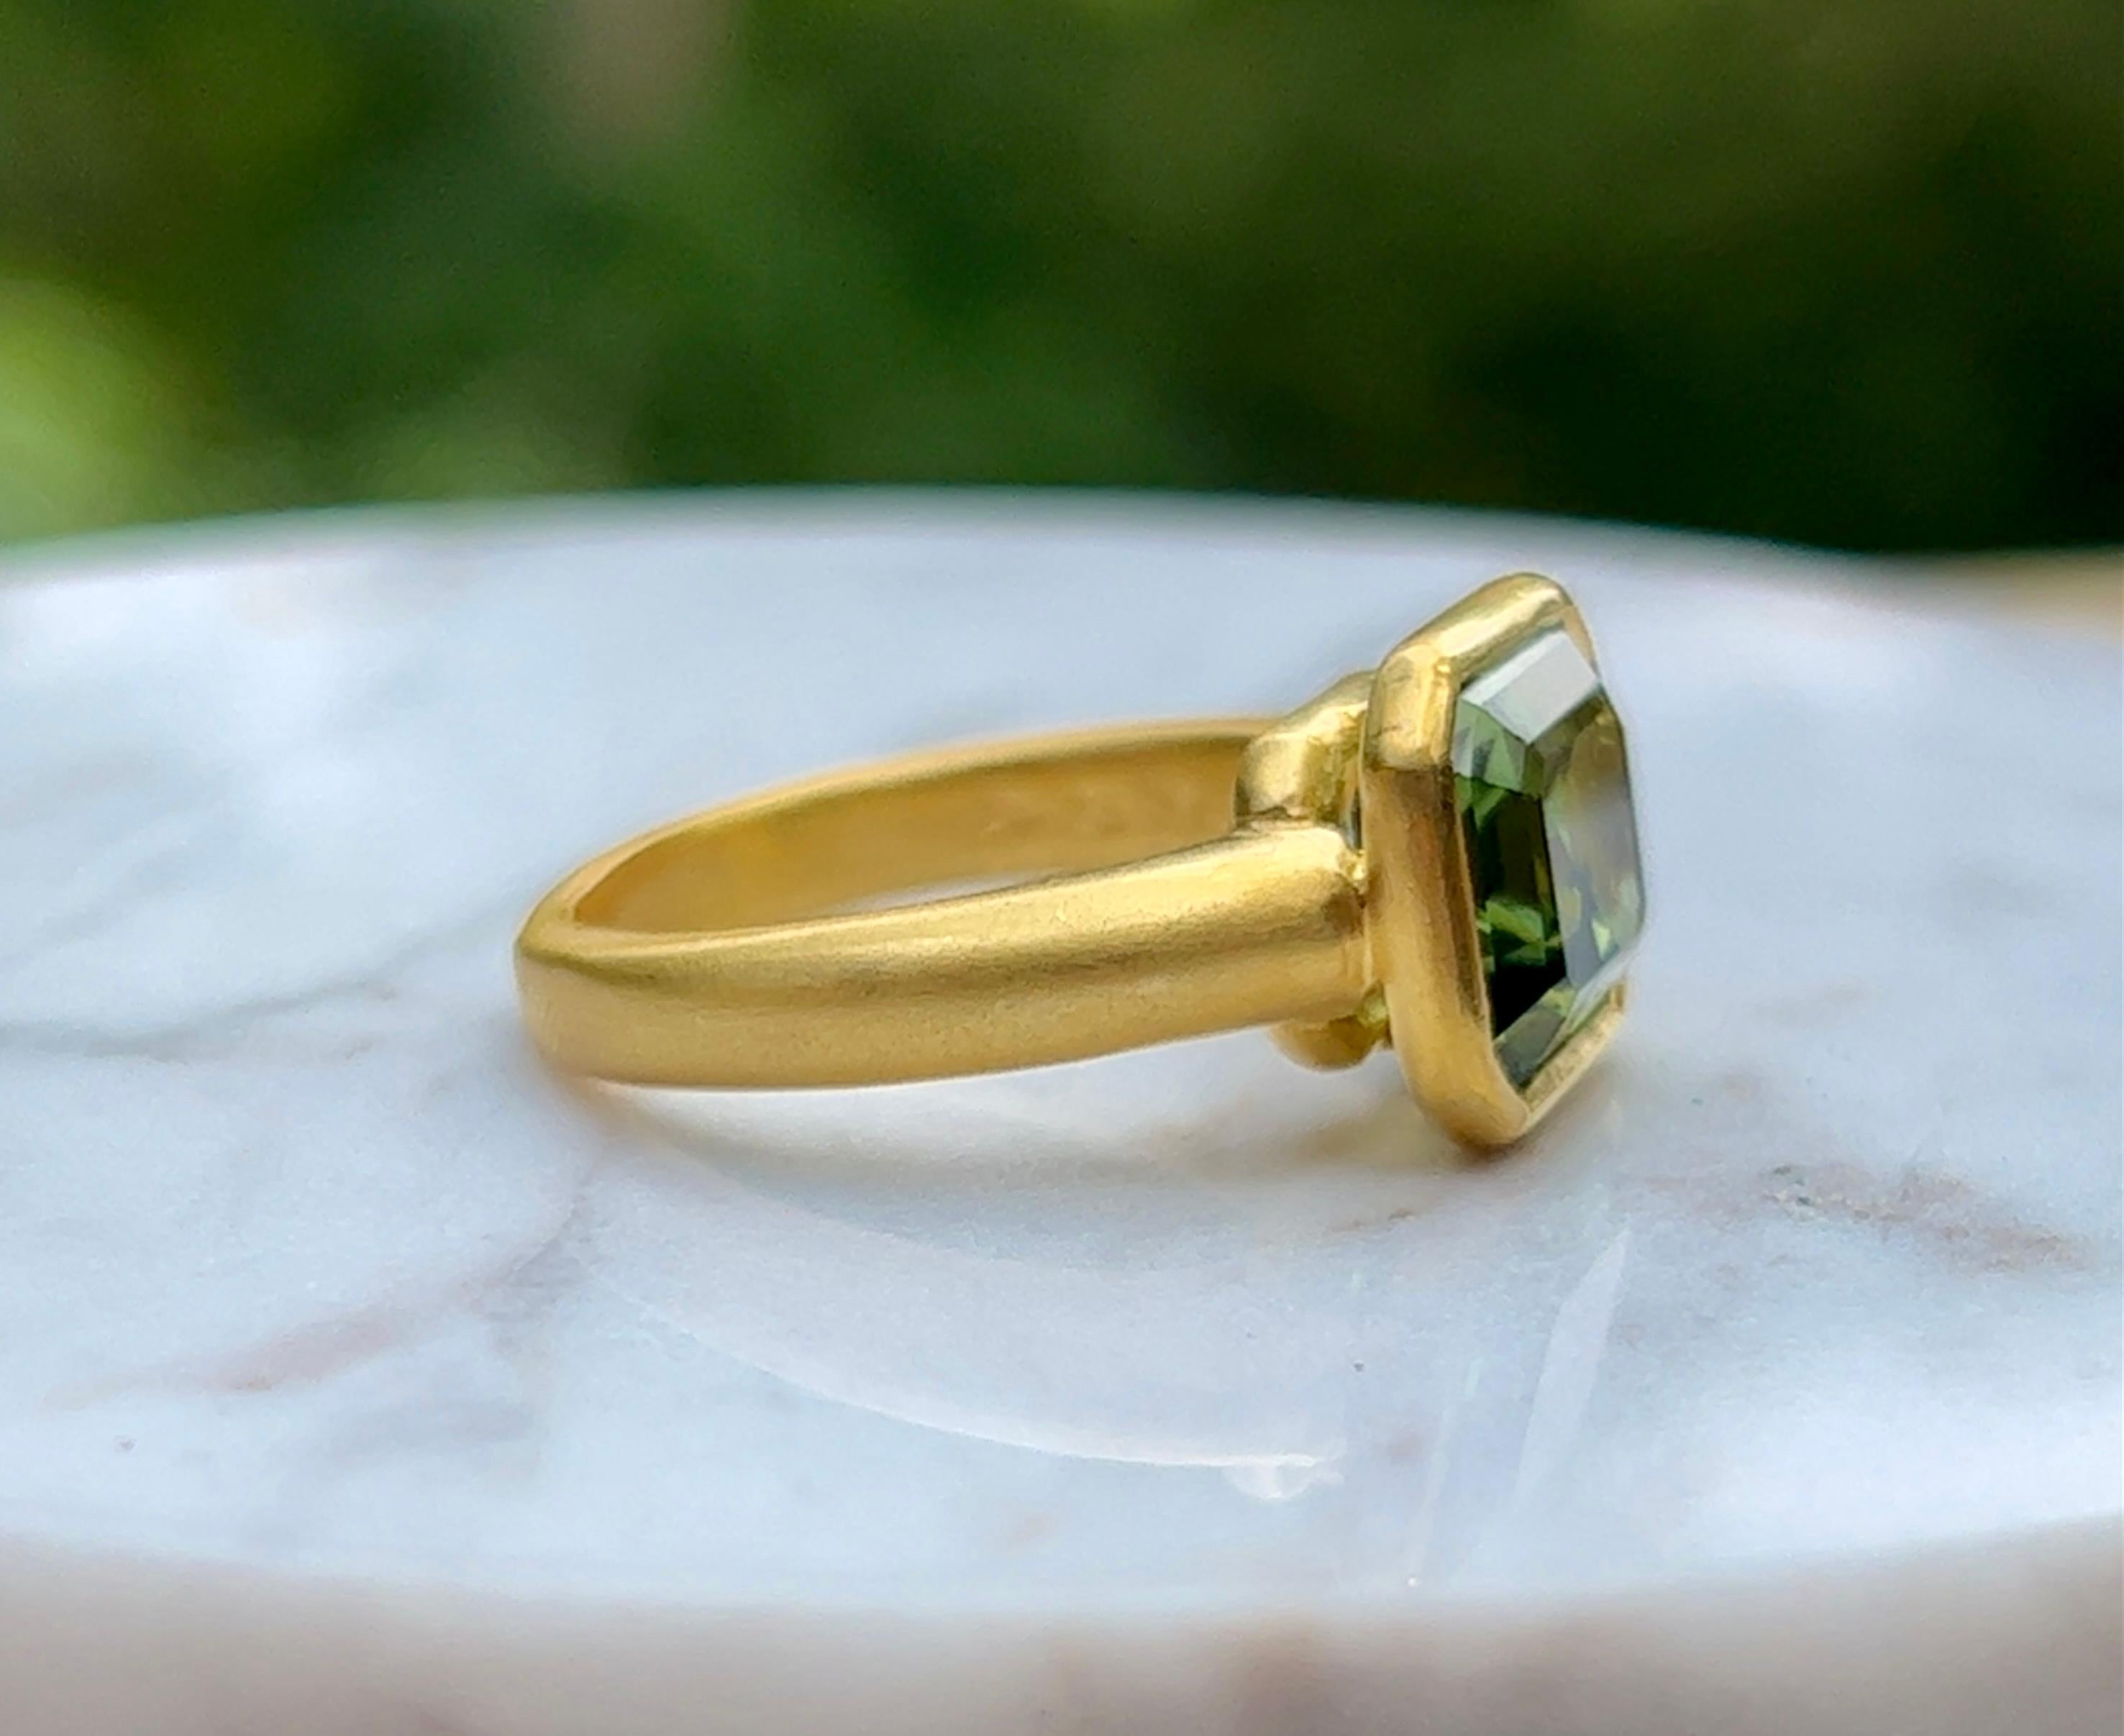 Emerald Cut H. Stern Green Tourmaline and Diamond Ring in 18K Gold